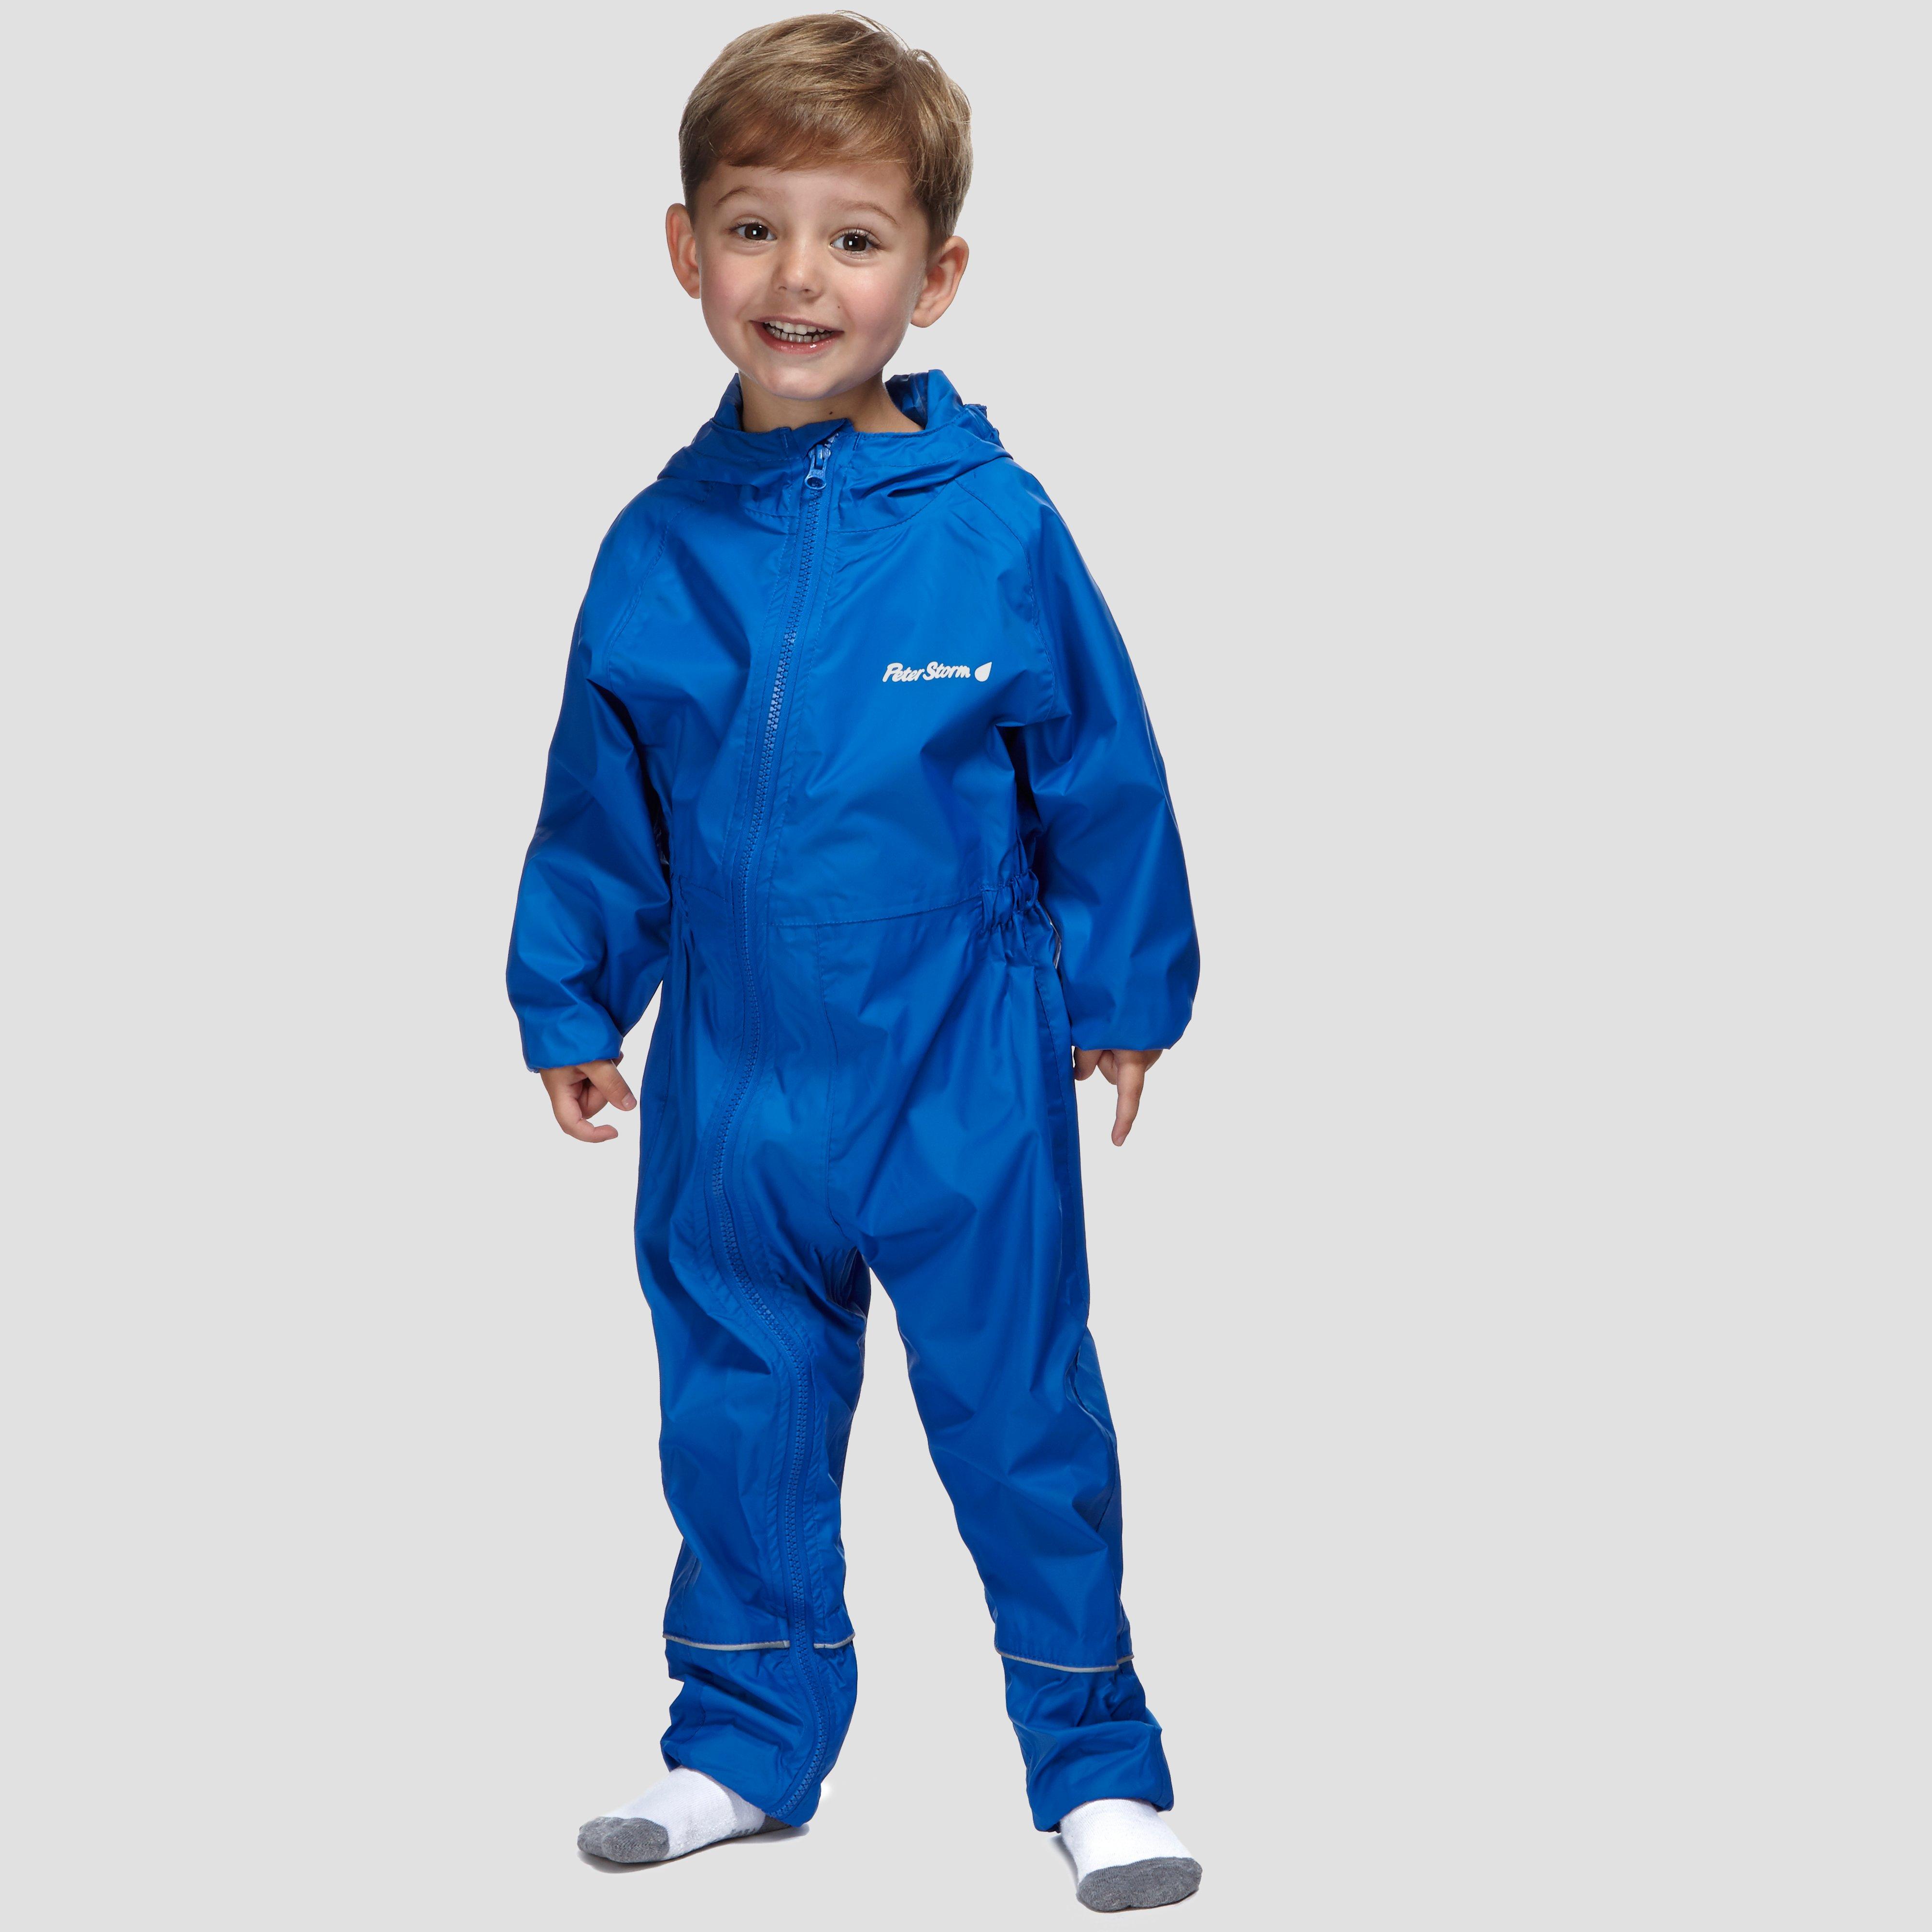 Peter Storm Kids Waterproof Suit - Blue  Blue